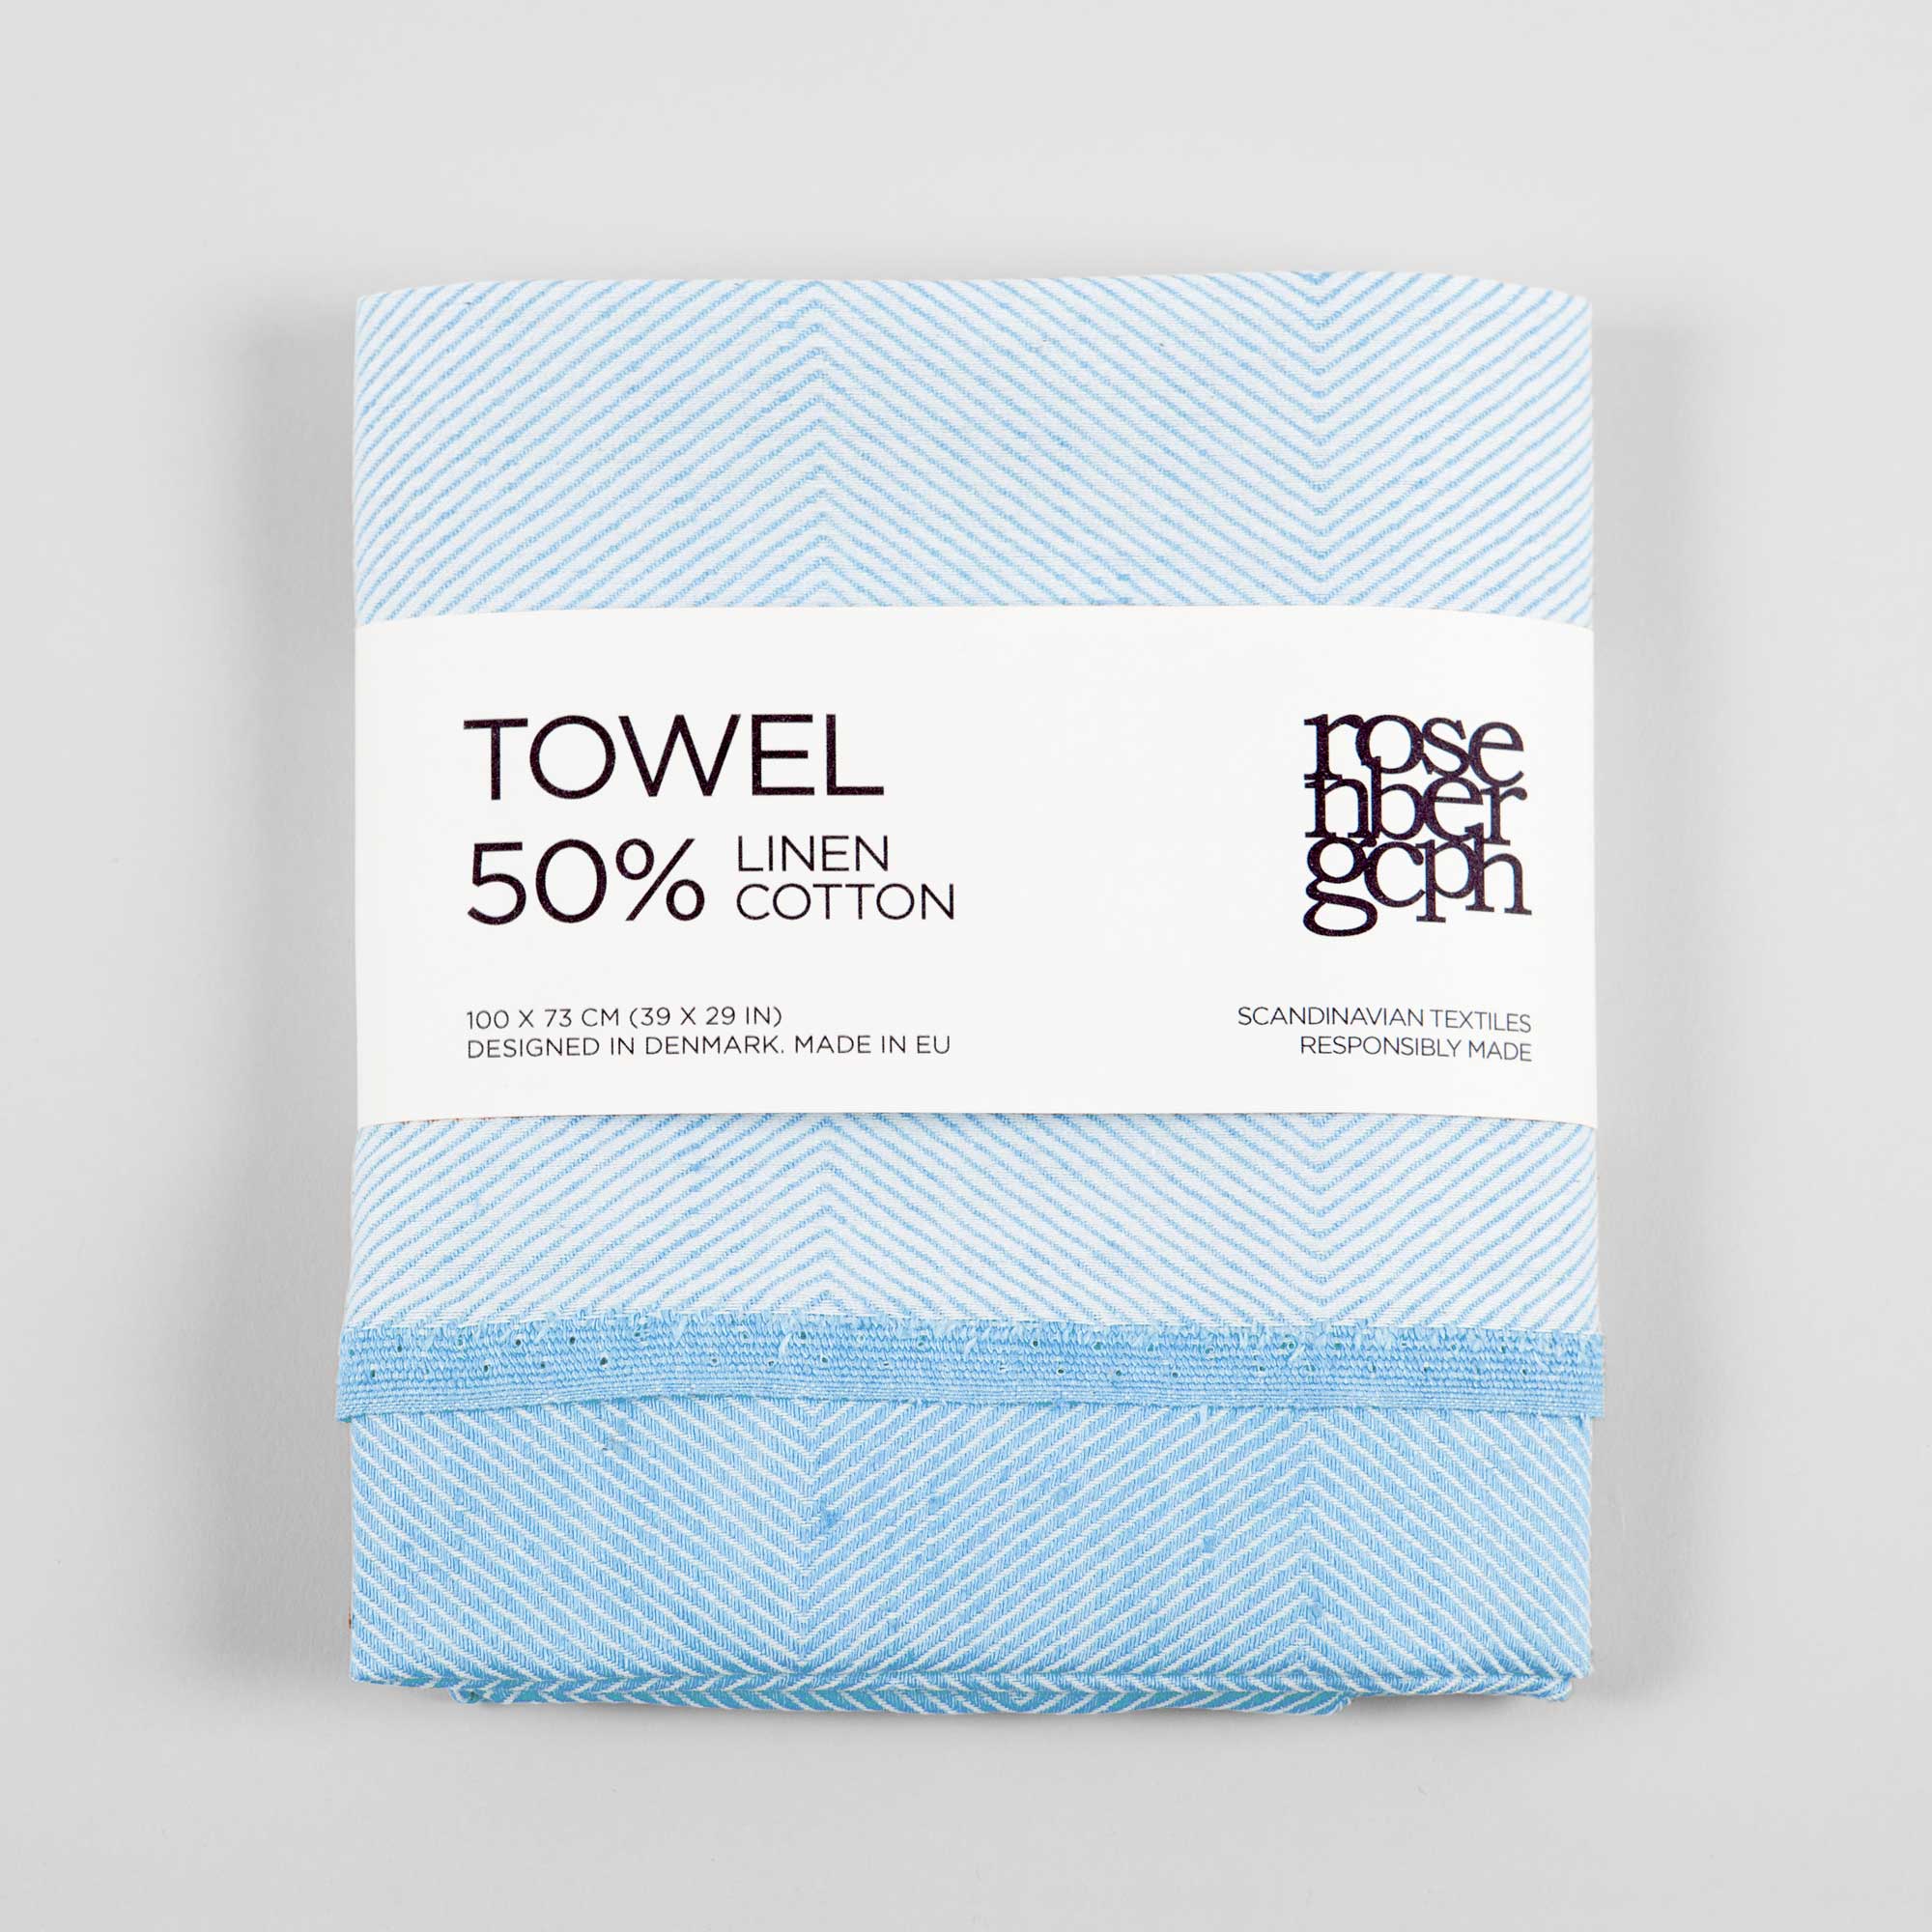 Håndklæde, himmelblå, hør/bomuld, design af Anne Rosenberg, RosenbergCph